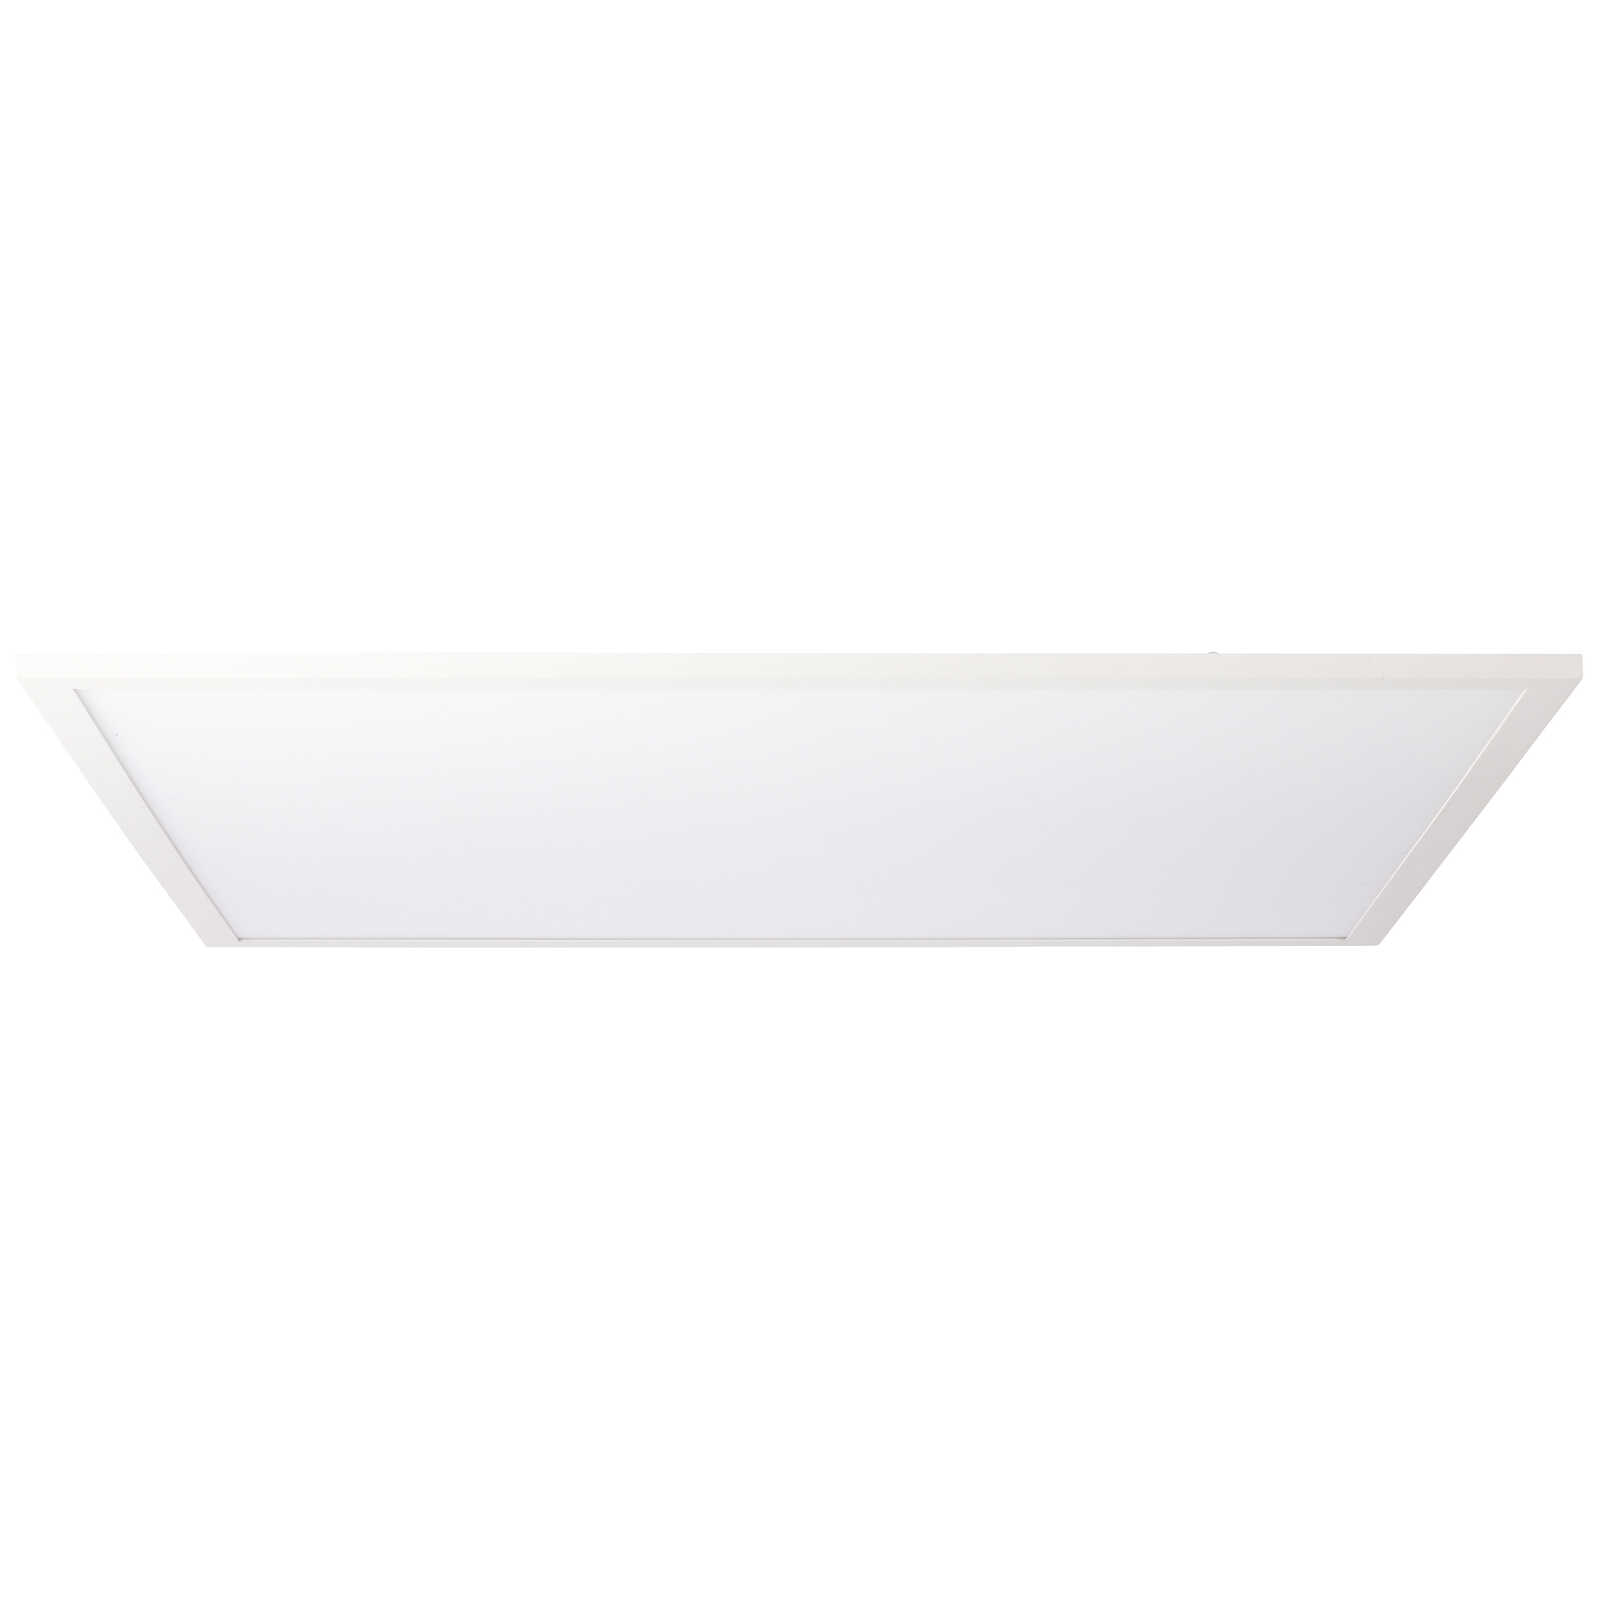             Plastic ceiling light - Constantin 10 - White
        